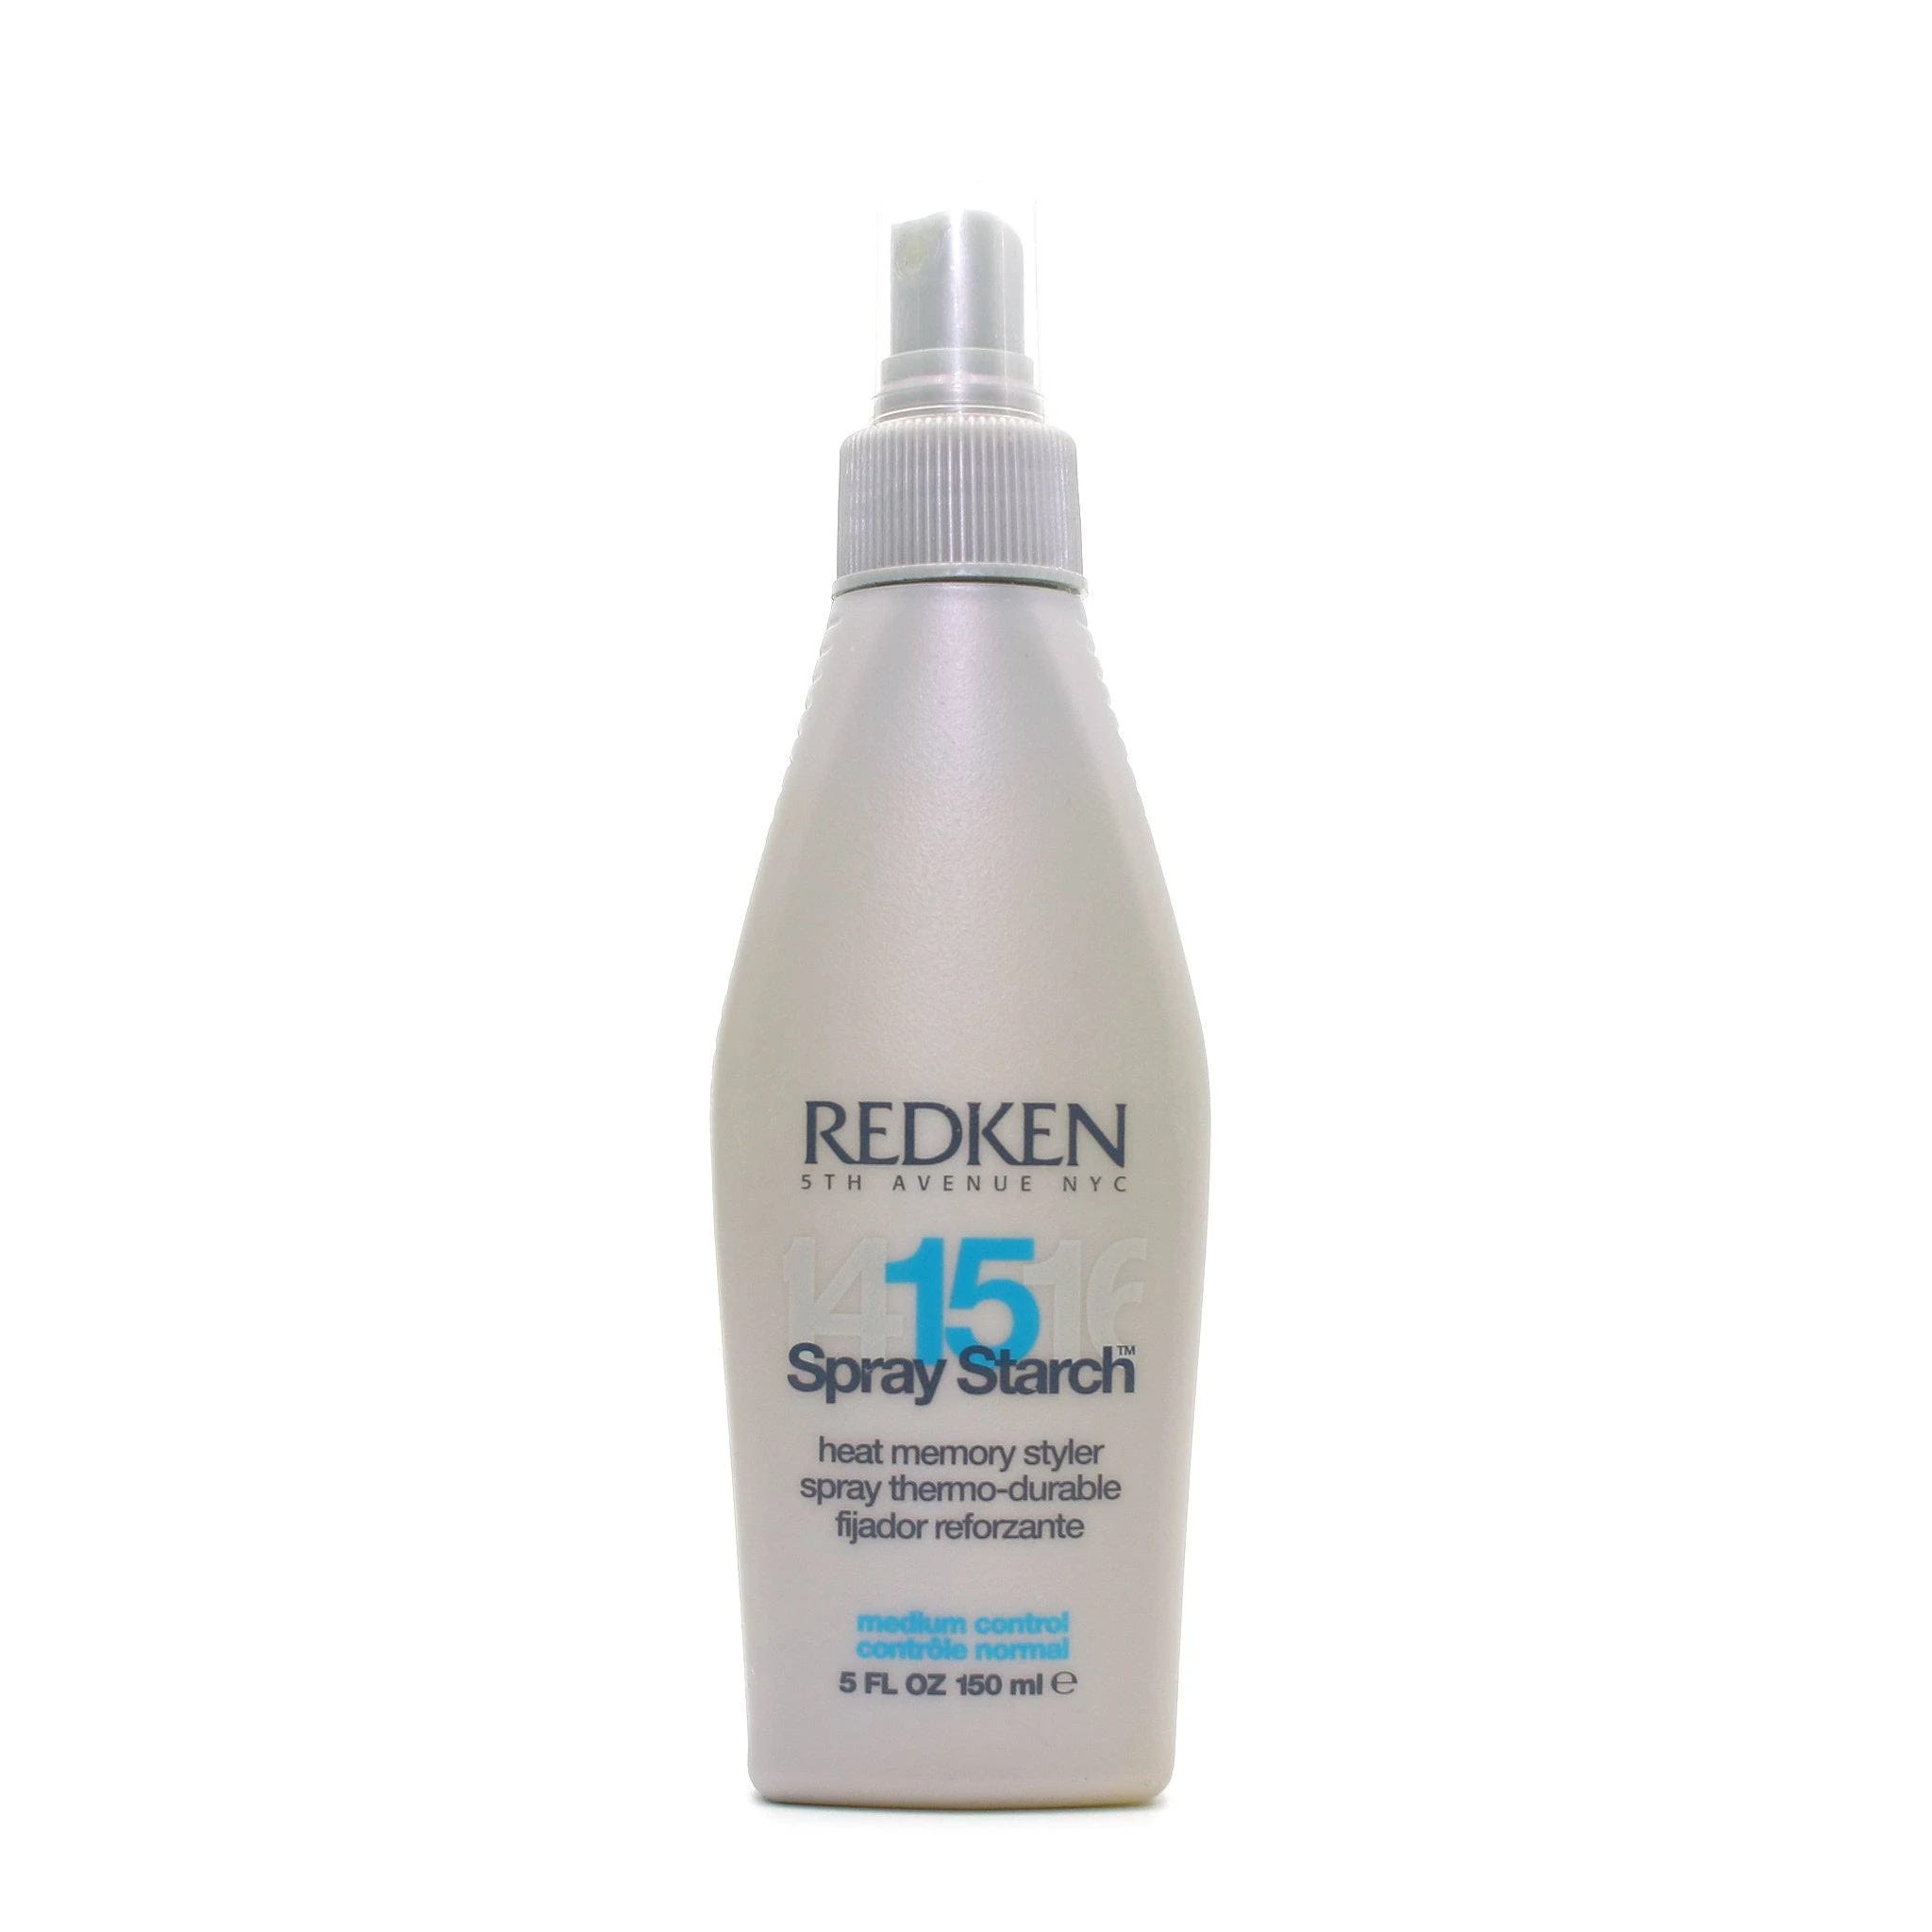 Redken 15 Heat Memory Styler Spray Starch for Shiny, Flexible Hair | Image